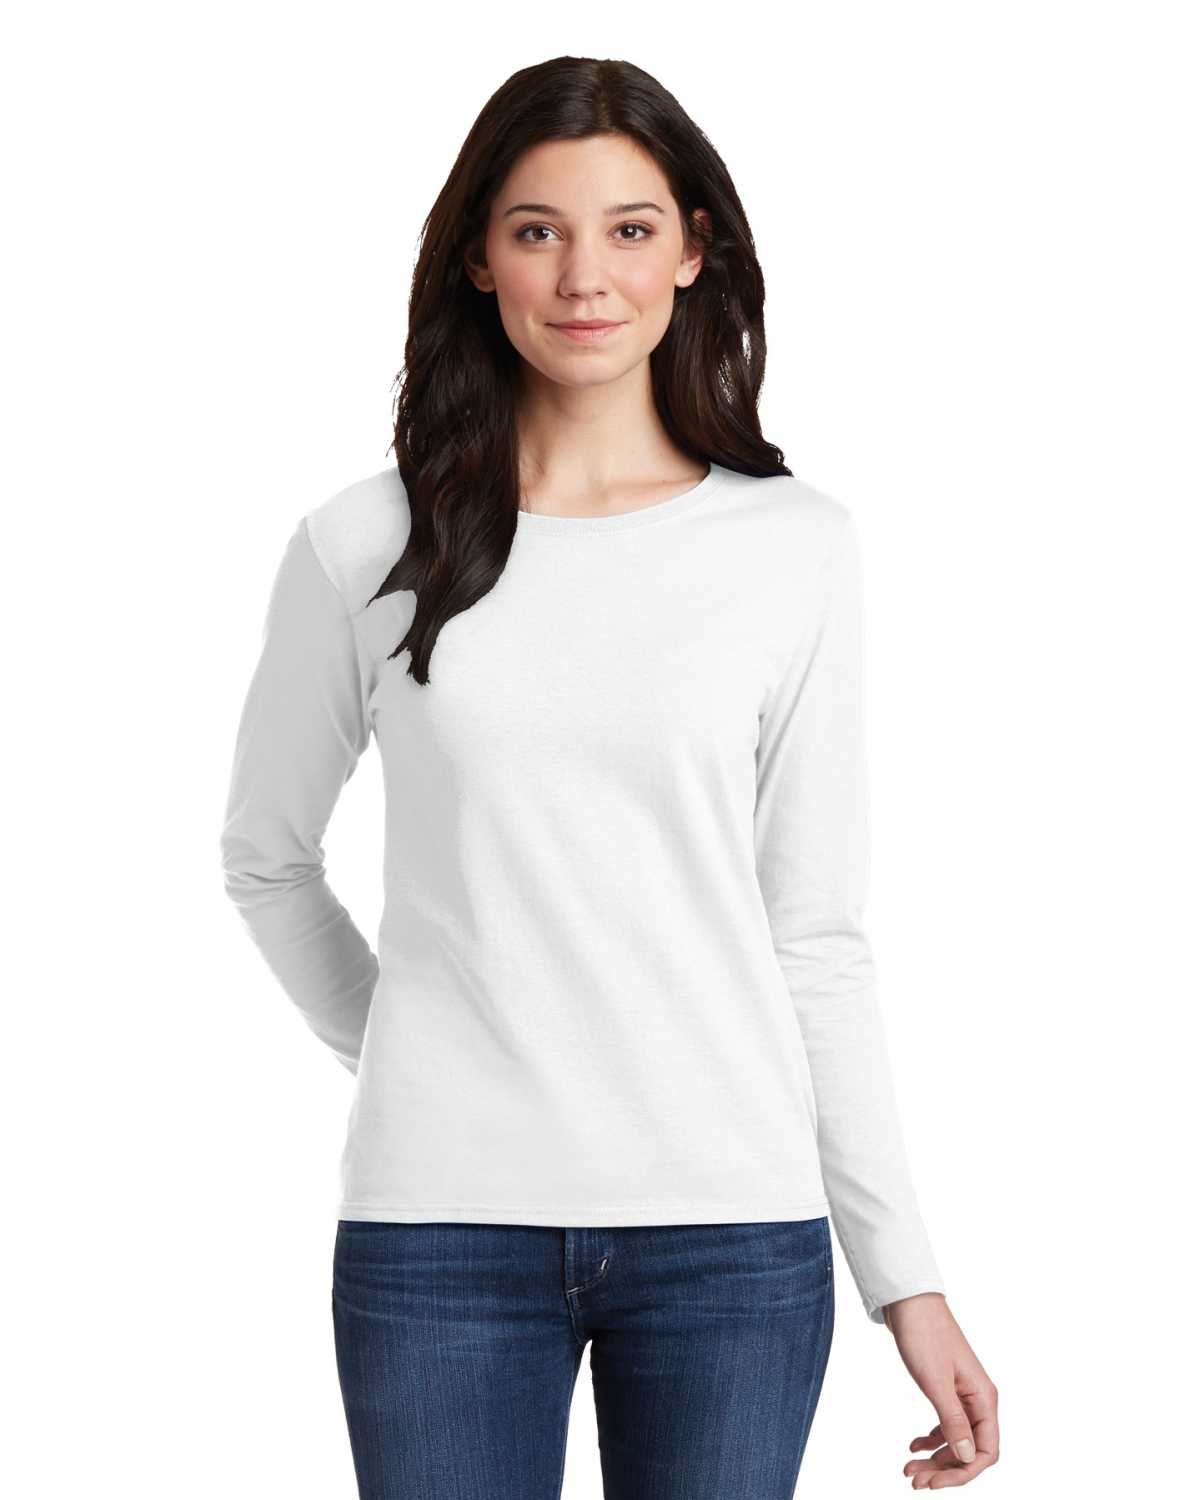 White Thick T Shirt Sleeve Long Shirt Cotton Ladies Gildan Heavy Shirts Model Blank